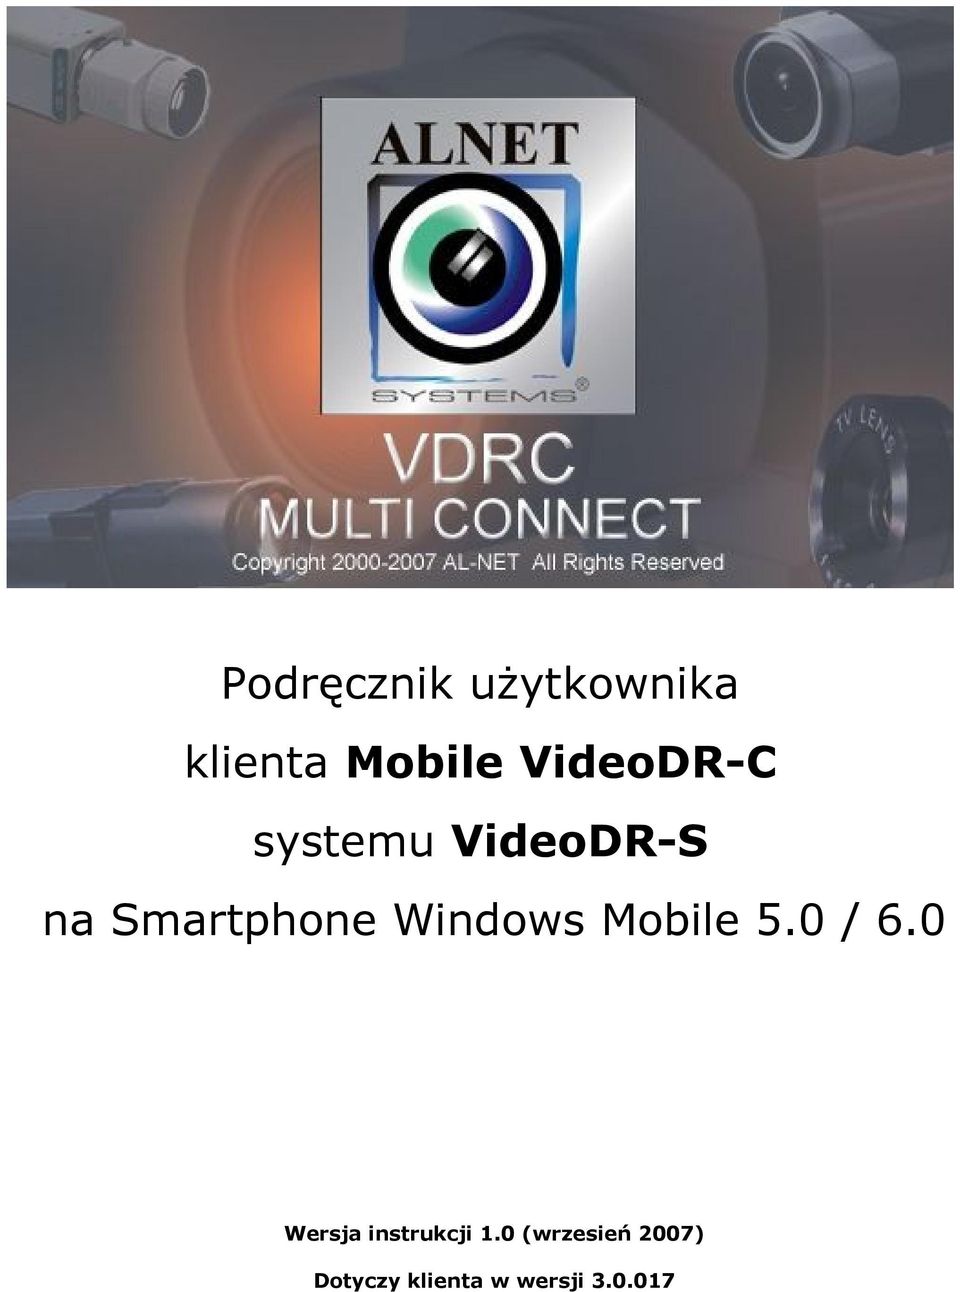 Windows Mobile 5.0 / 6.